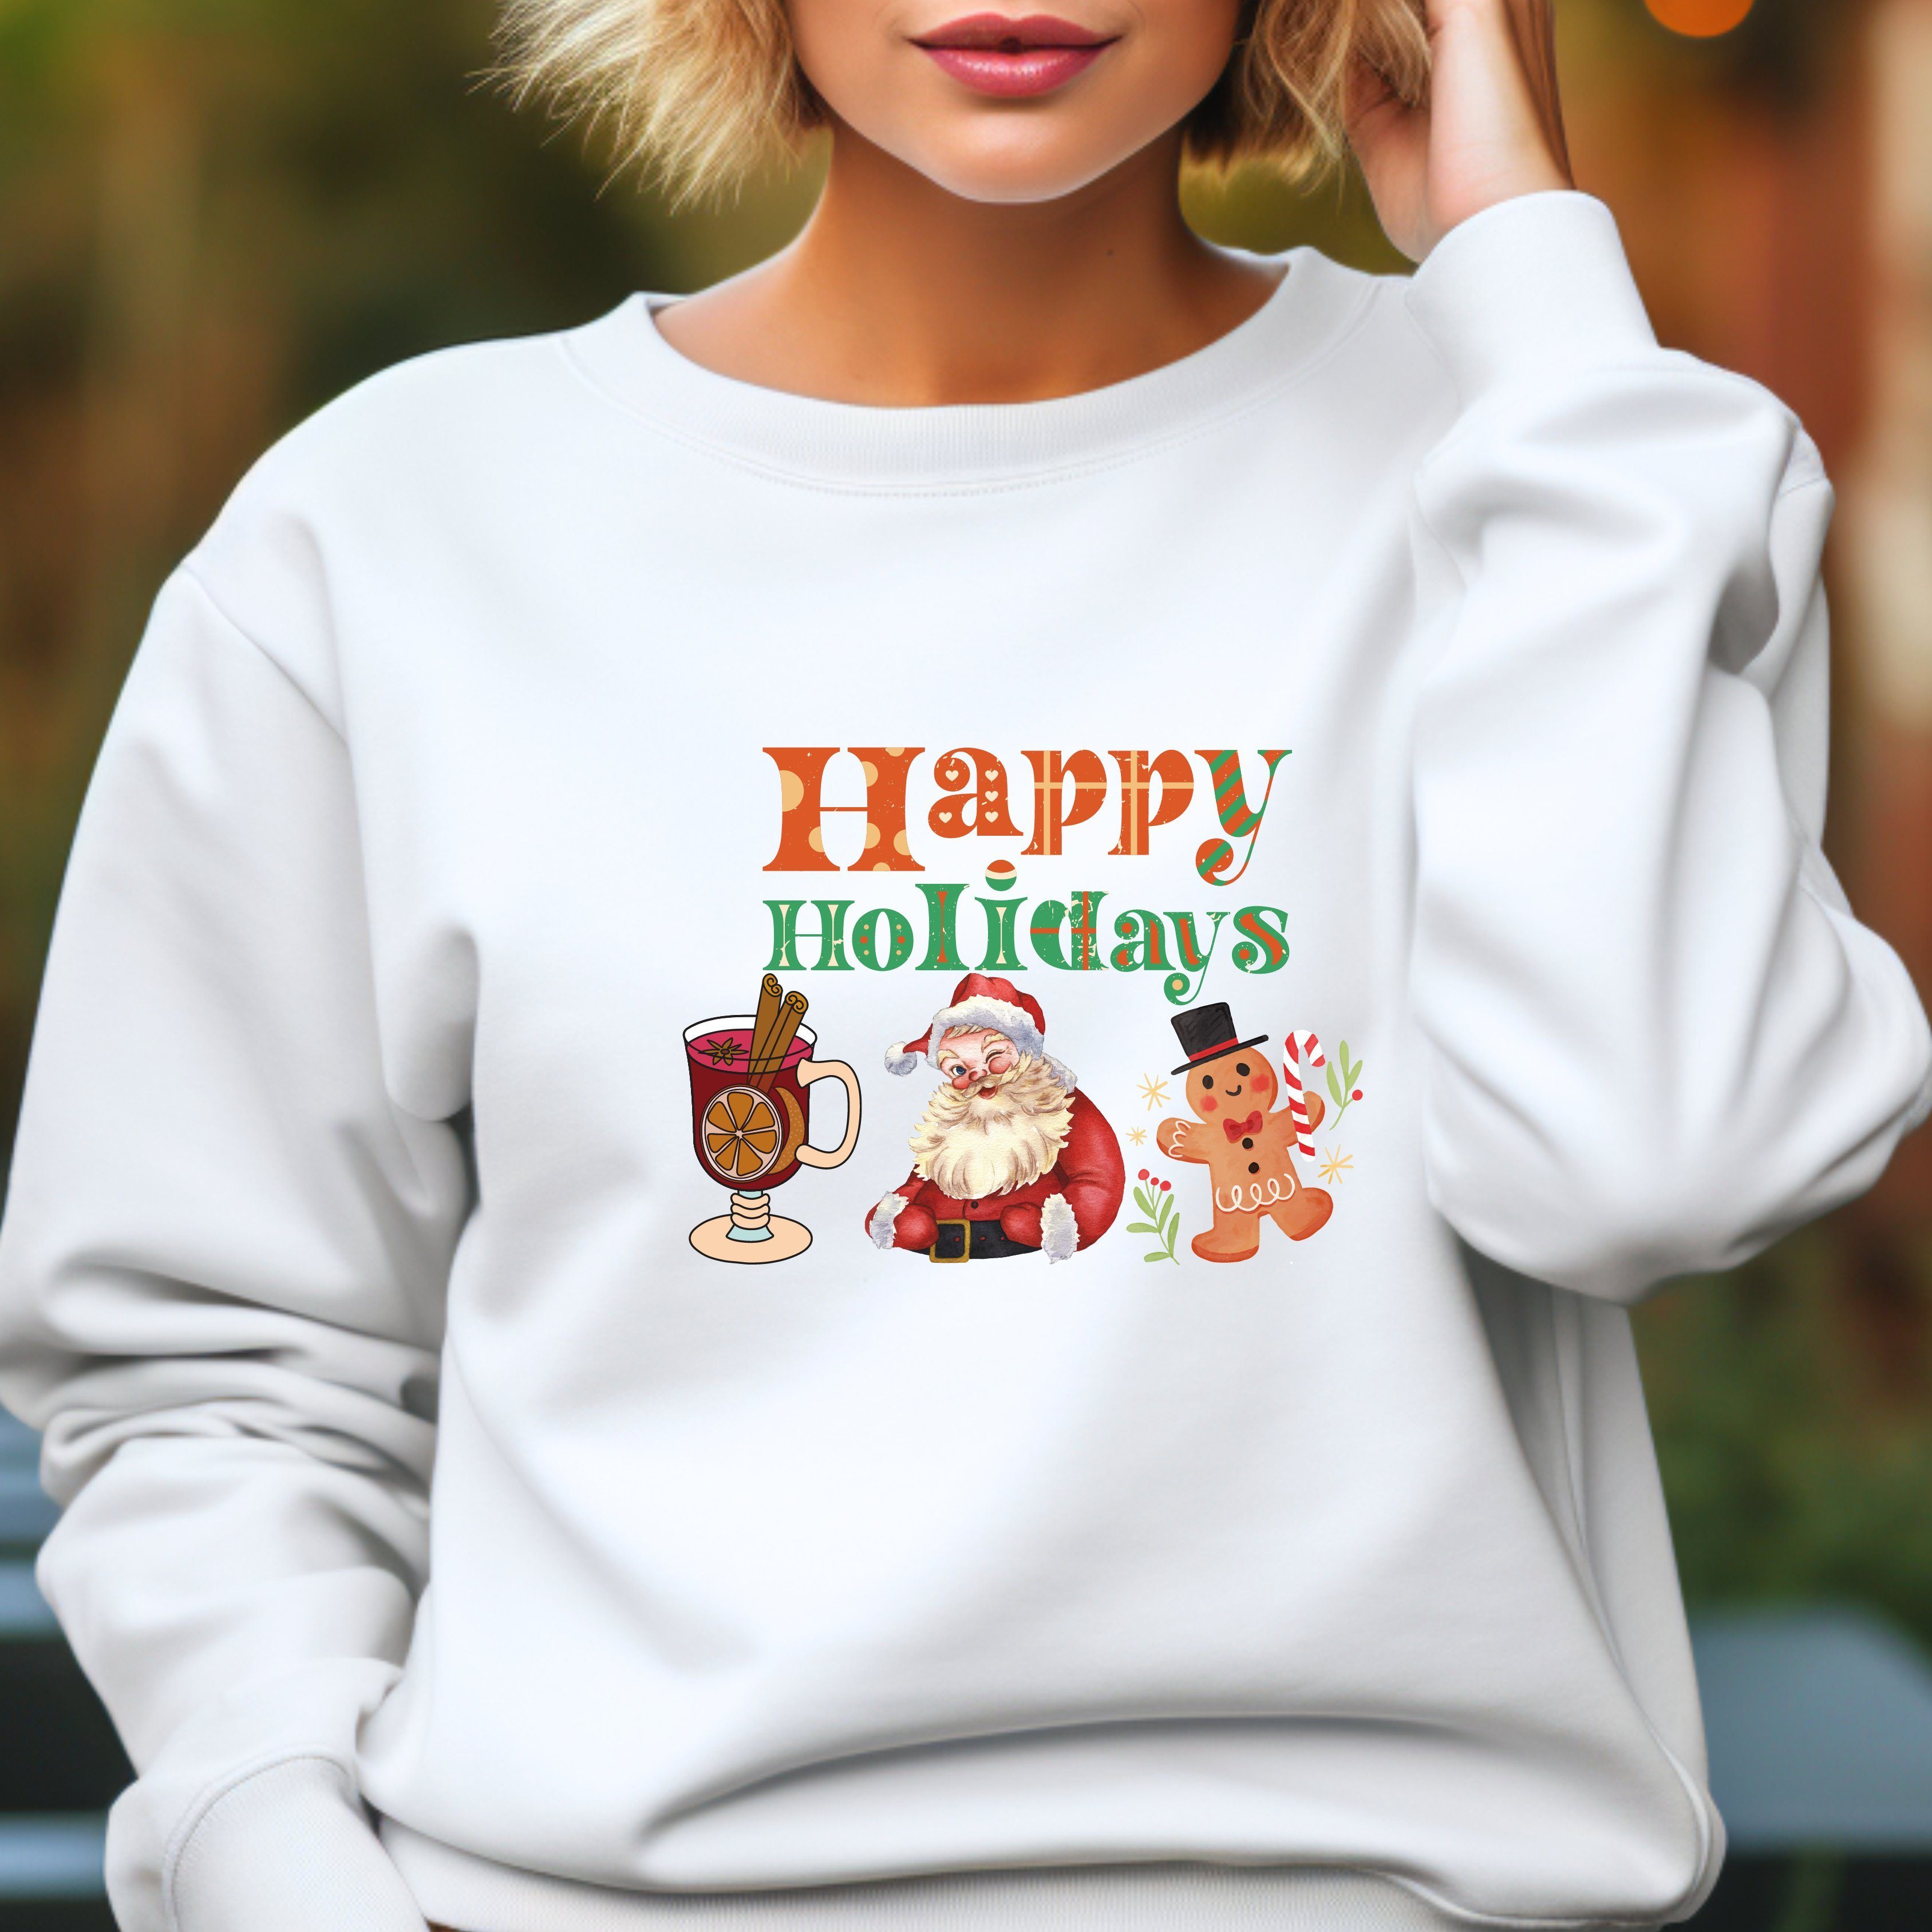 Elegance Sweater Weihnachtssweatshirt, Weihnachtssweatshirt Quality Holidays Christmas Happy